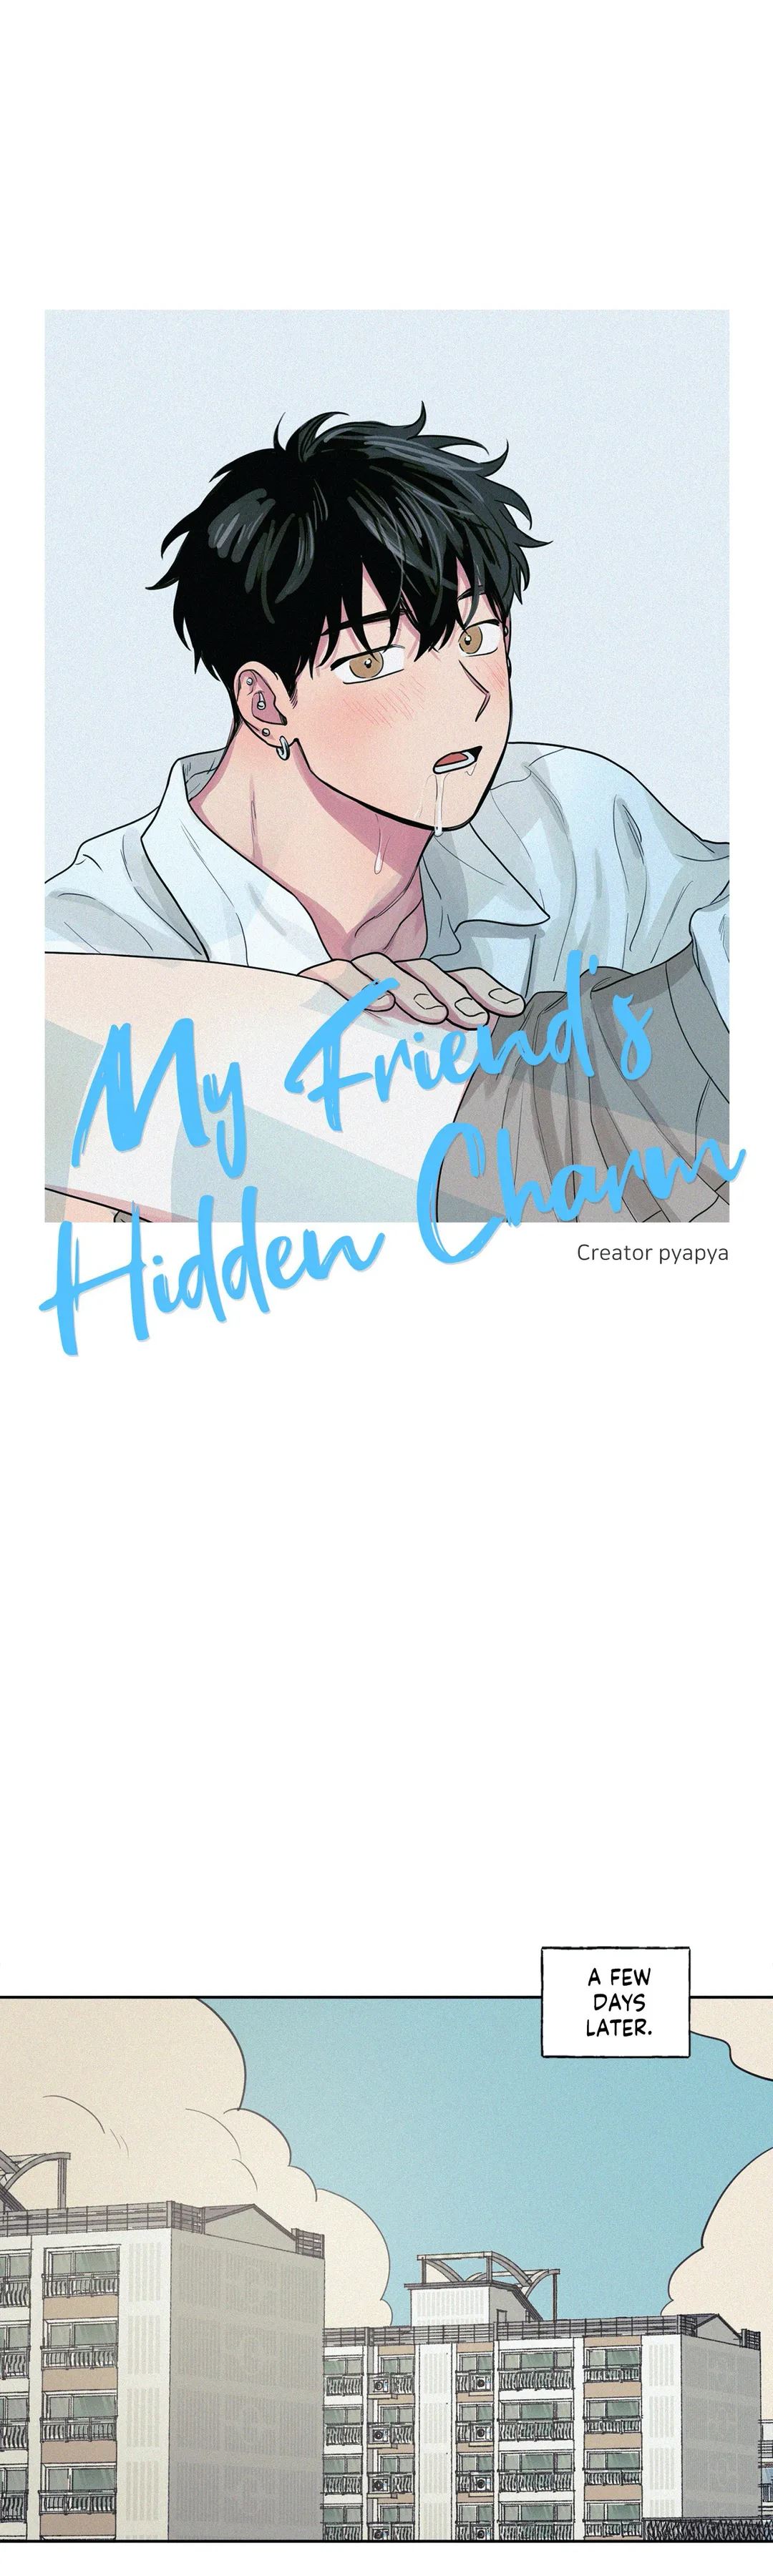 My Friend’s Hidden Charm image